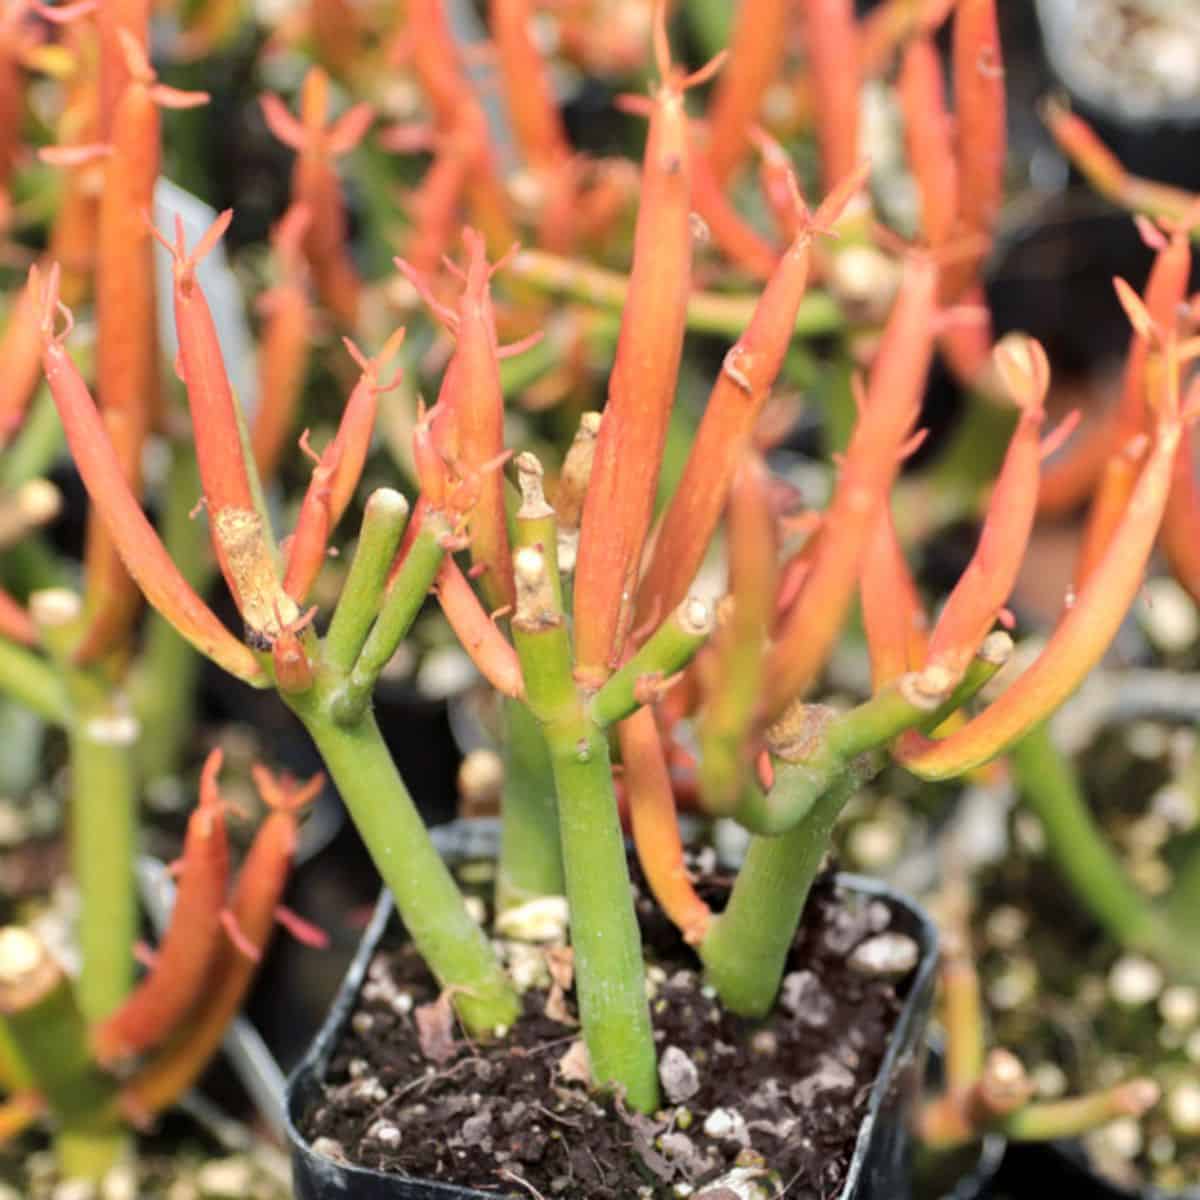 Euphorbia Tirucalli - “Sticks on Fire” in a pot.